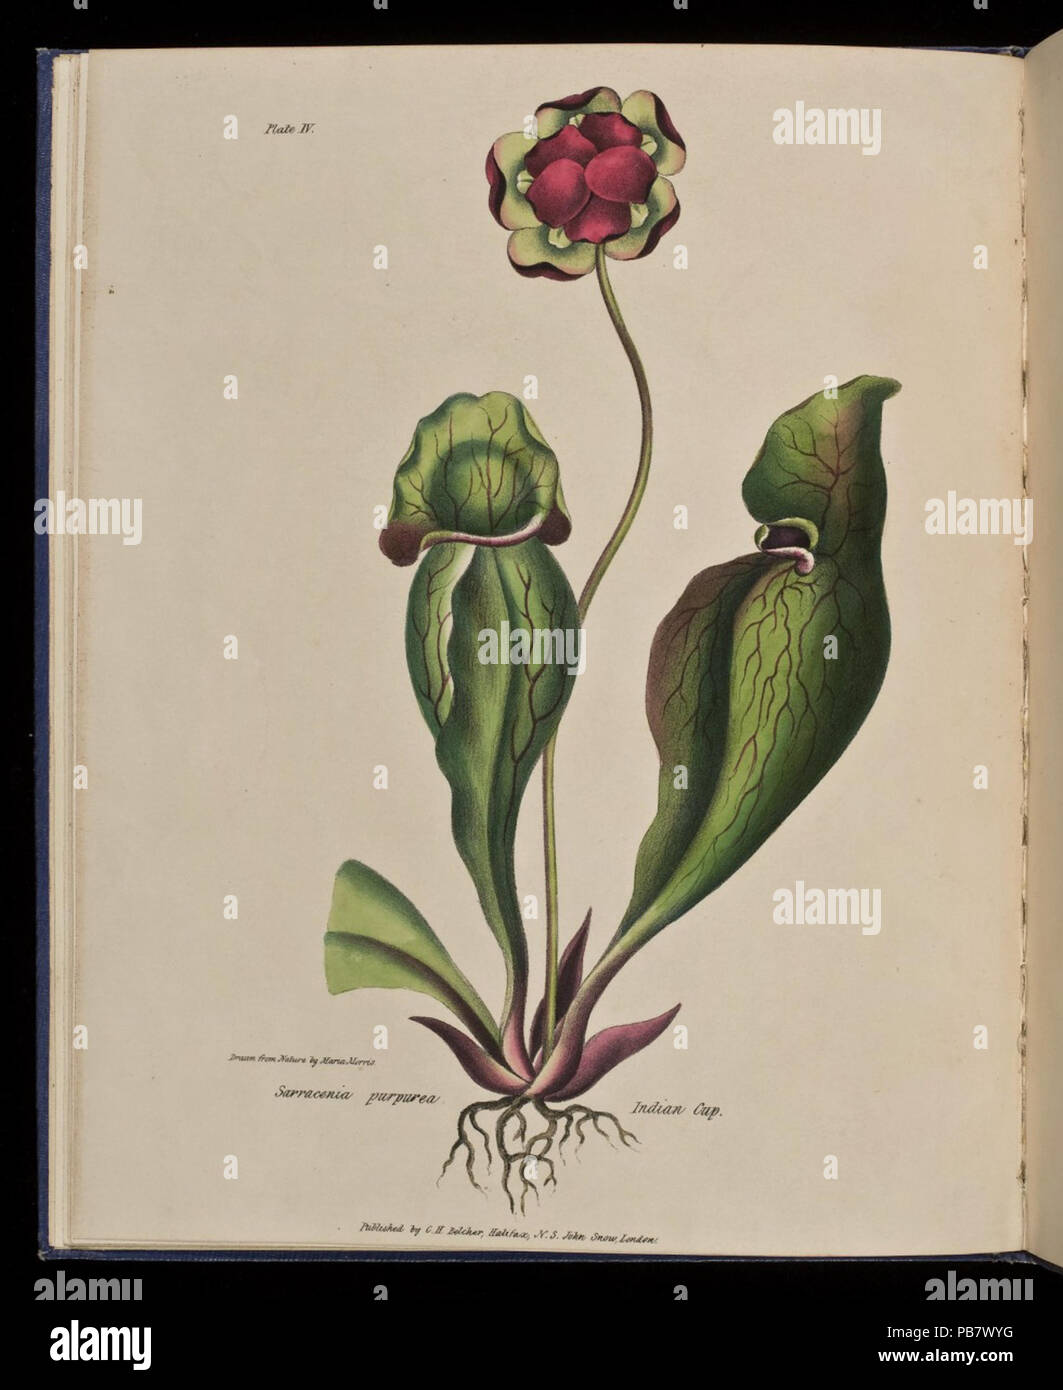 1853 Wild Flowers of Nova Scotia Sarracenia purpurea. Indian Cup (Plate IV) Stock Photo